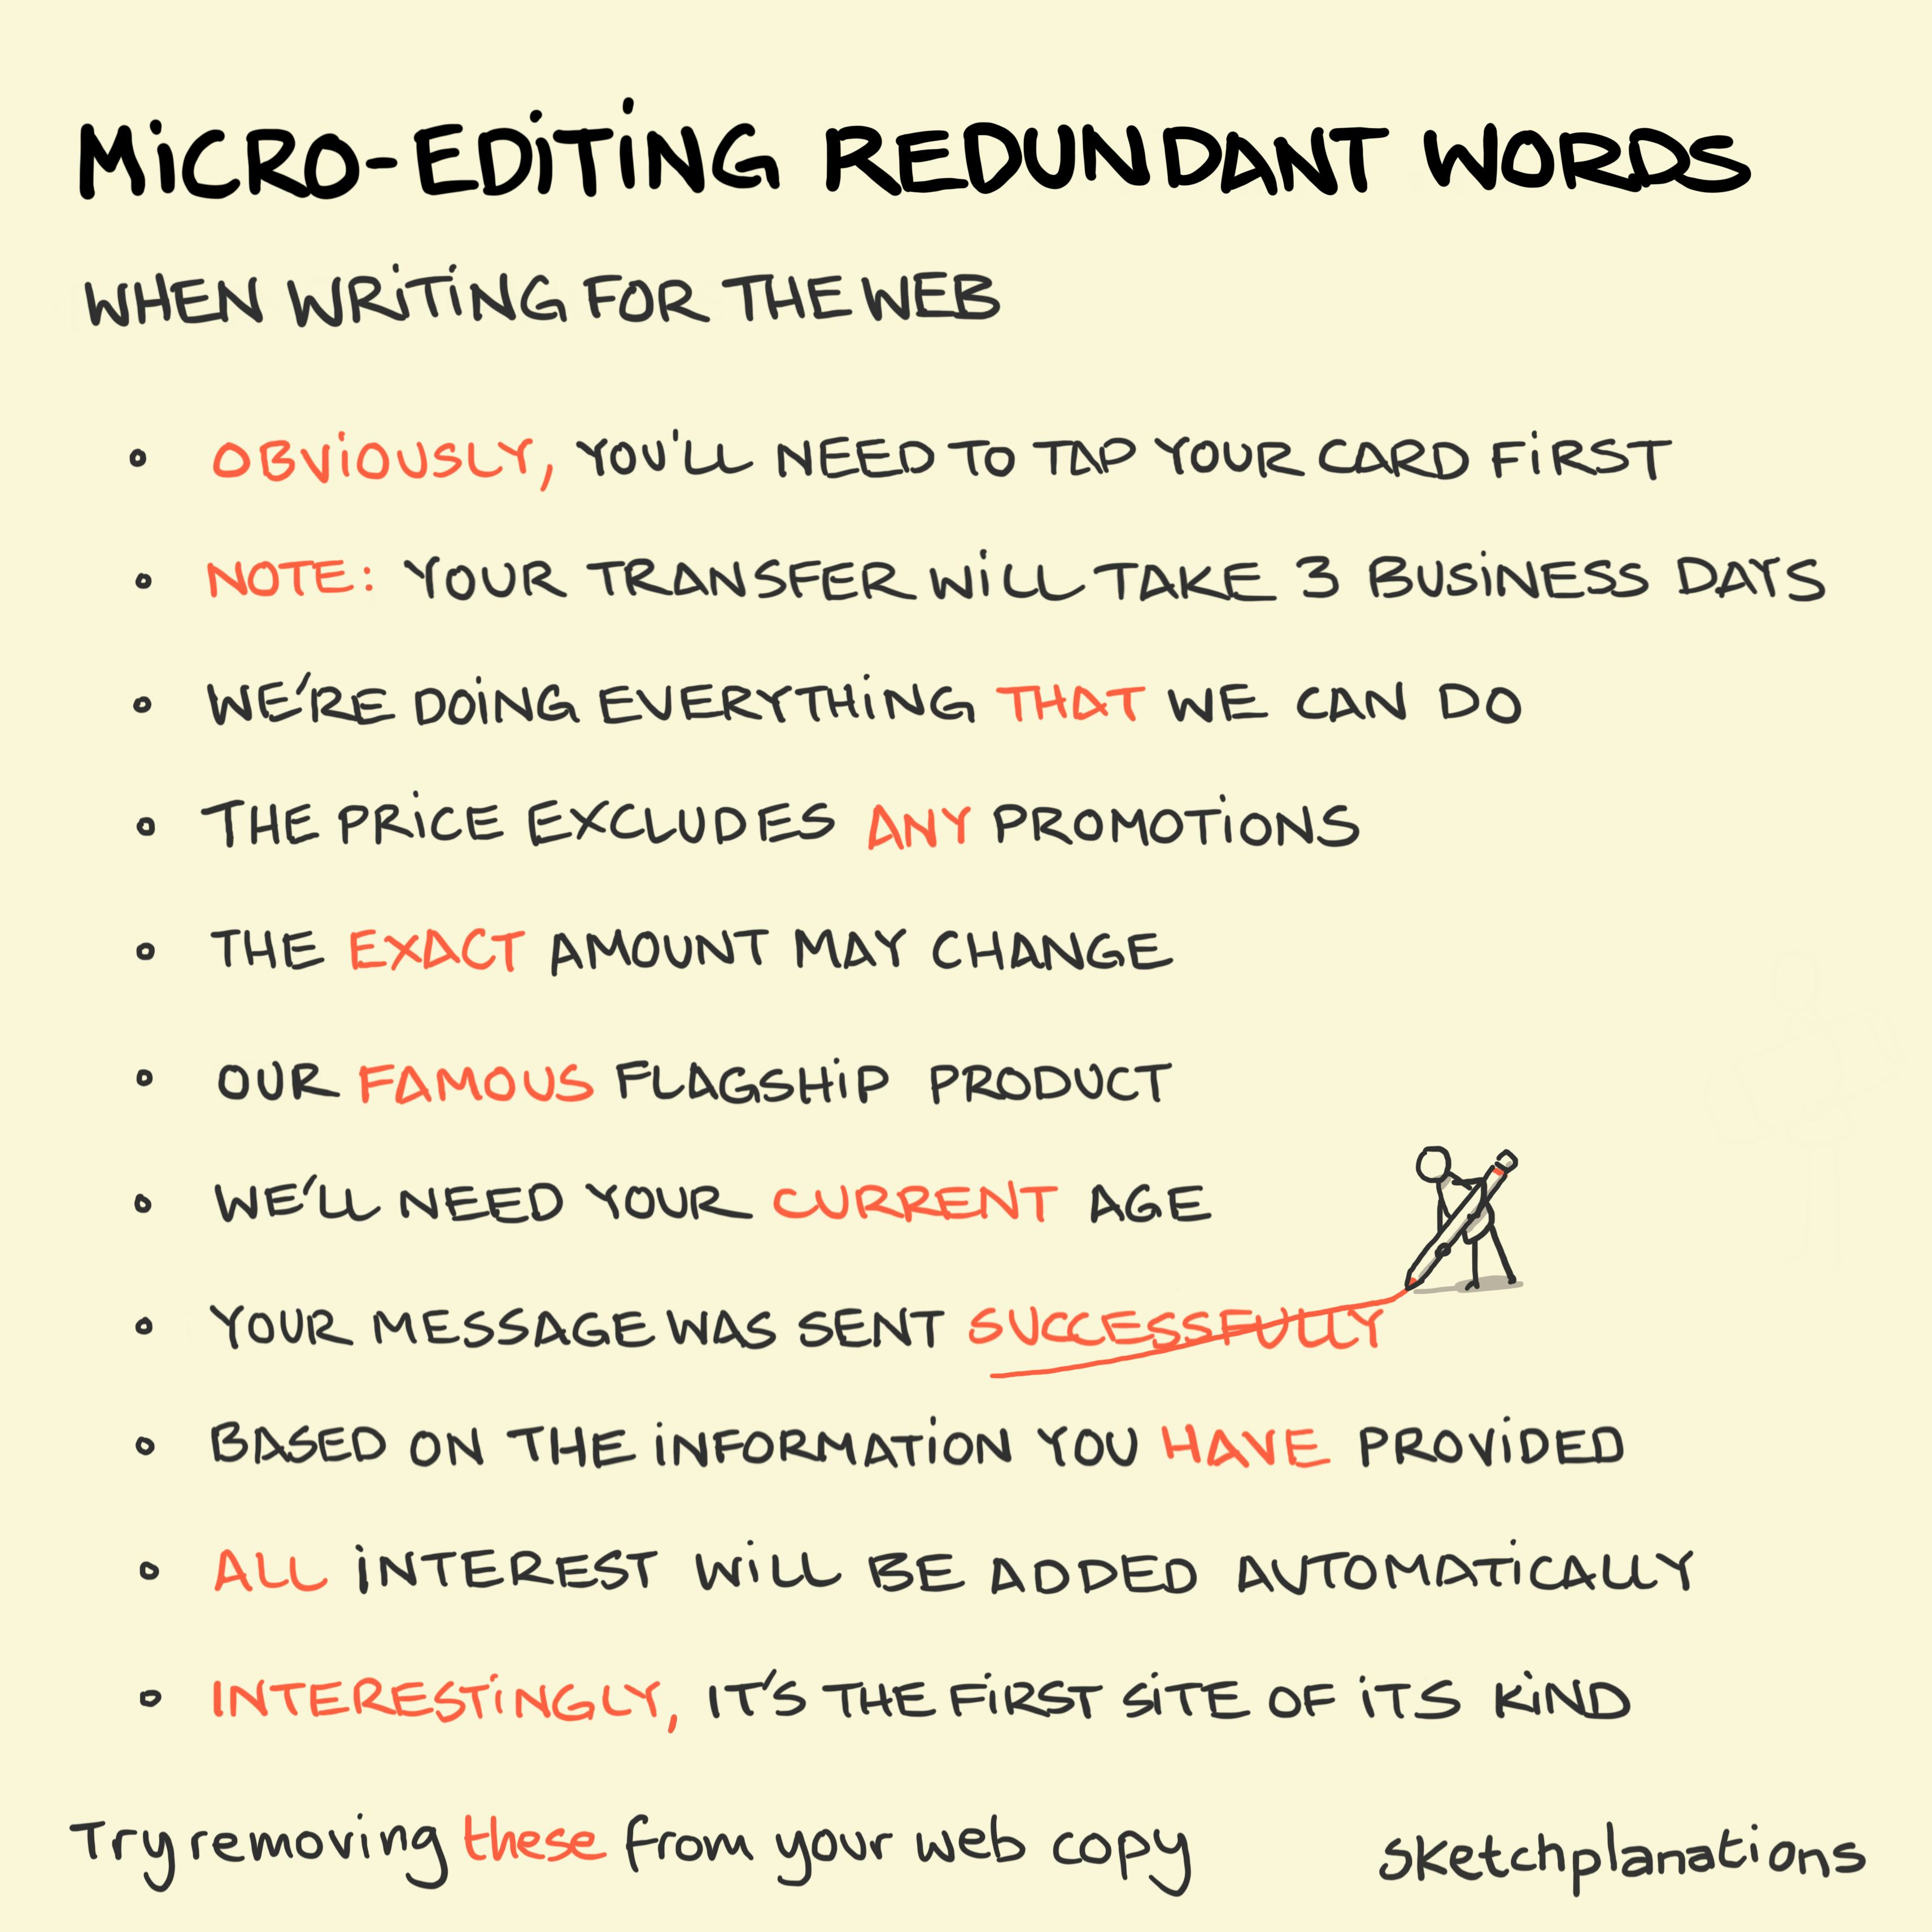 Micro-editing redundant words - Sketchplanations